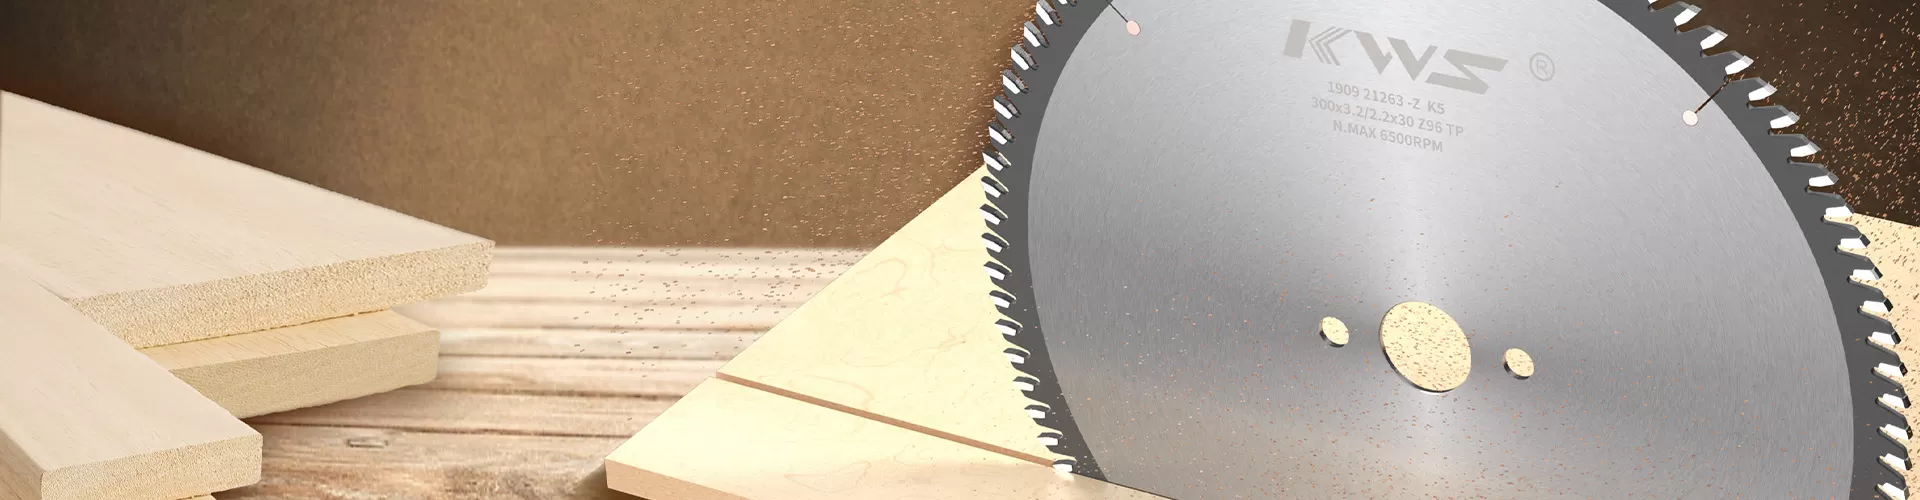 Aluminum Cut Saw blade